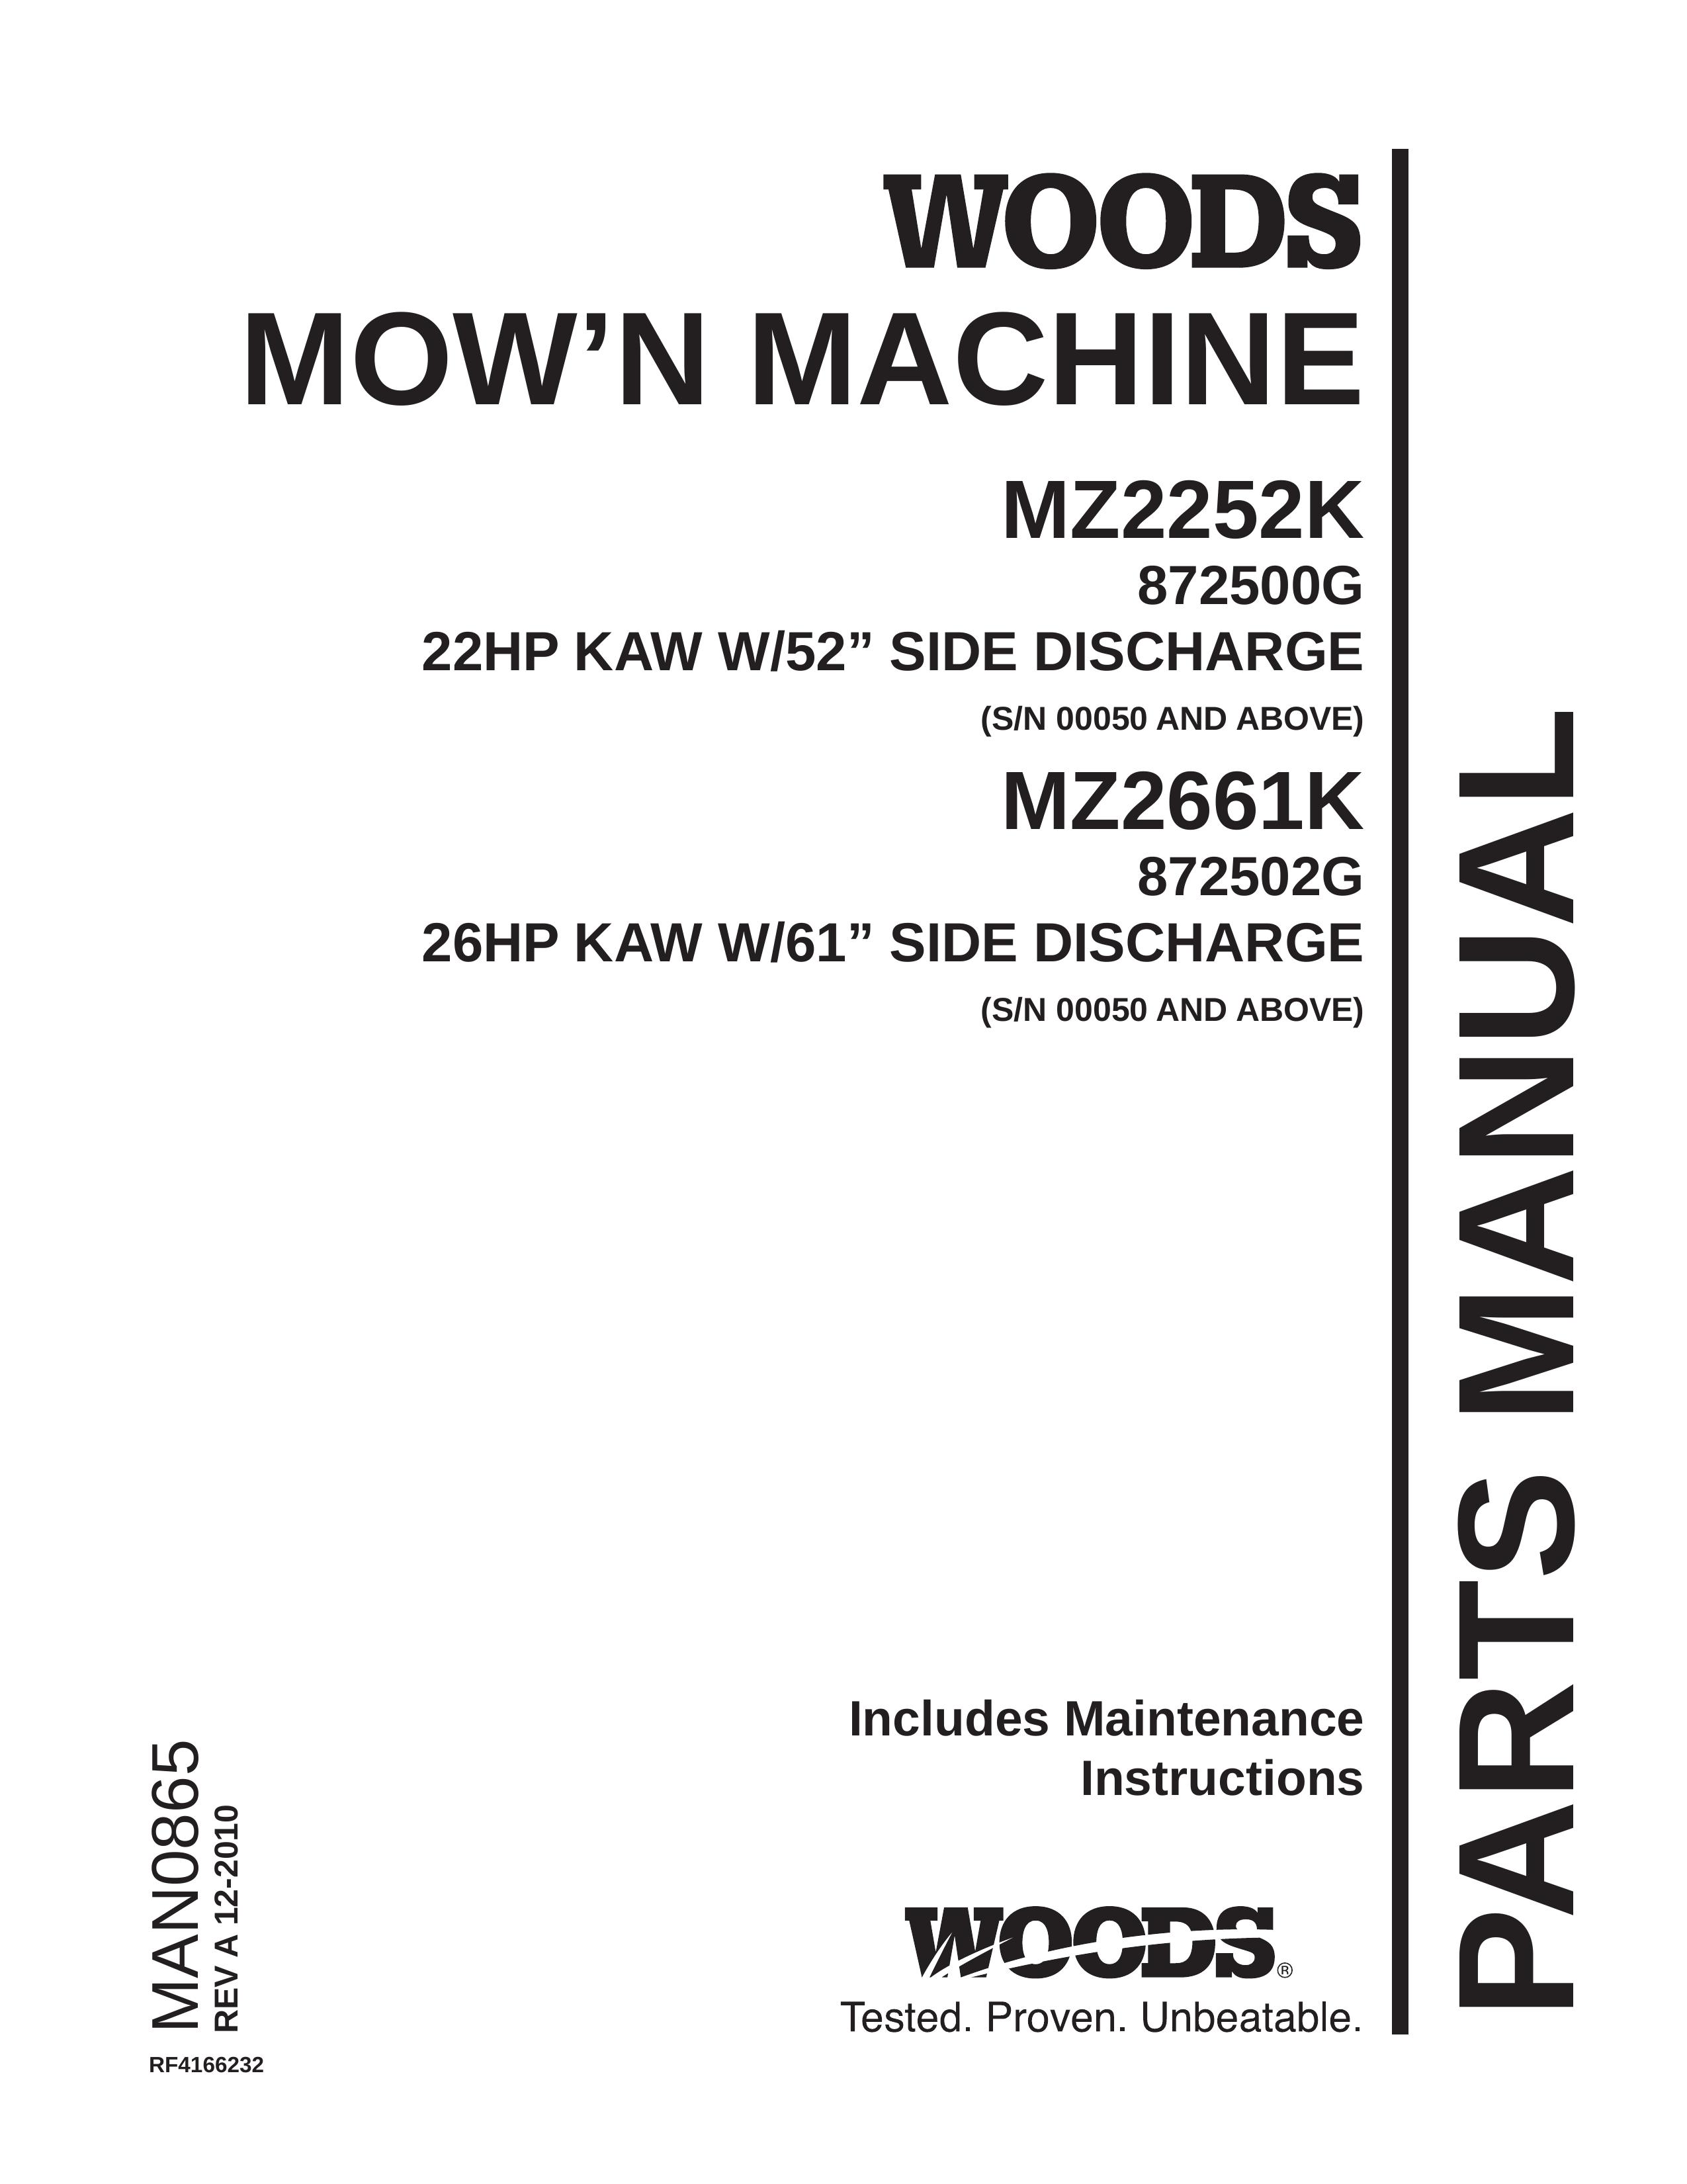 Woods Equipment MZ2661K Lawn Mower User Manual